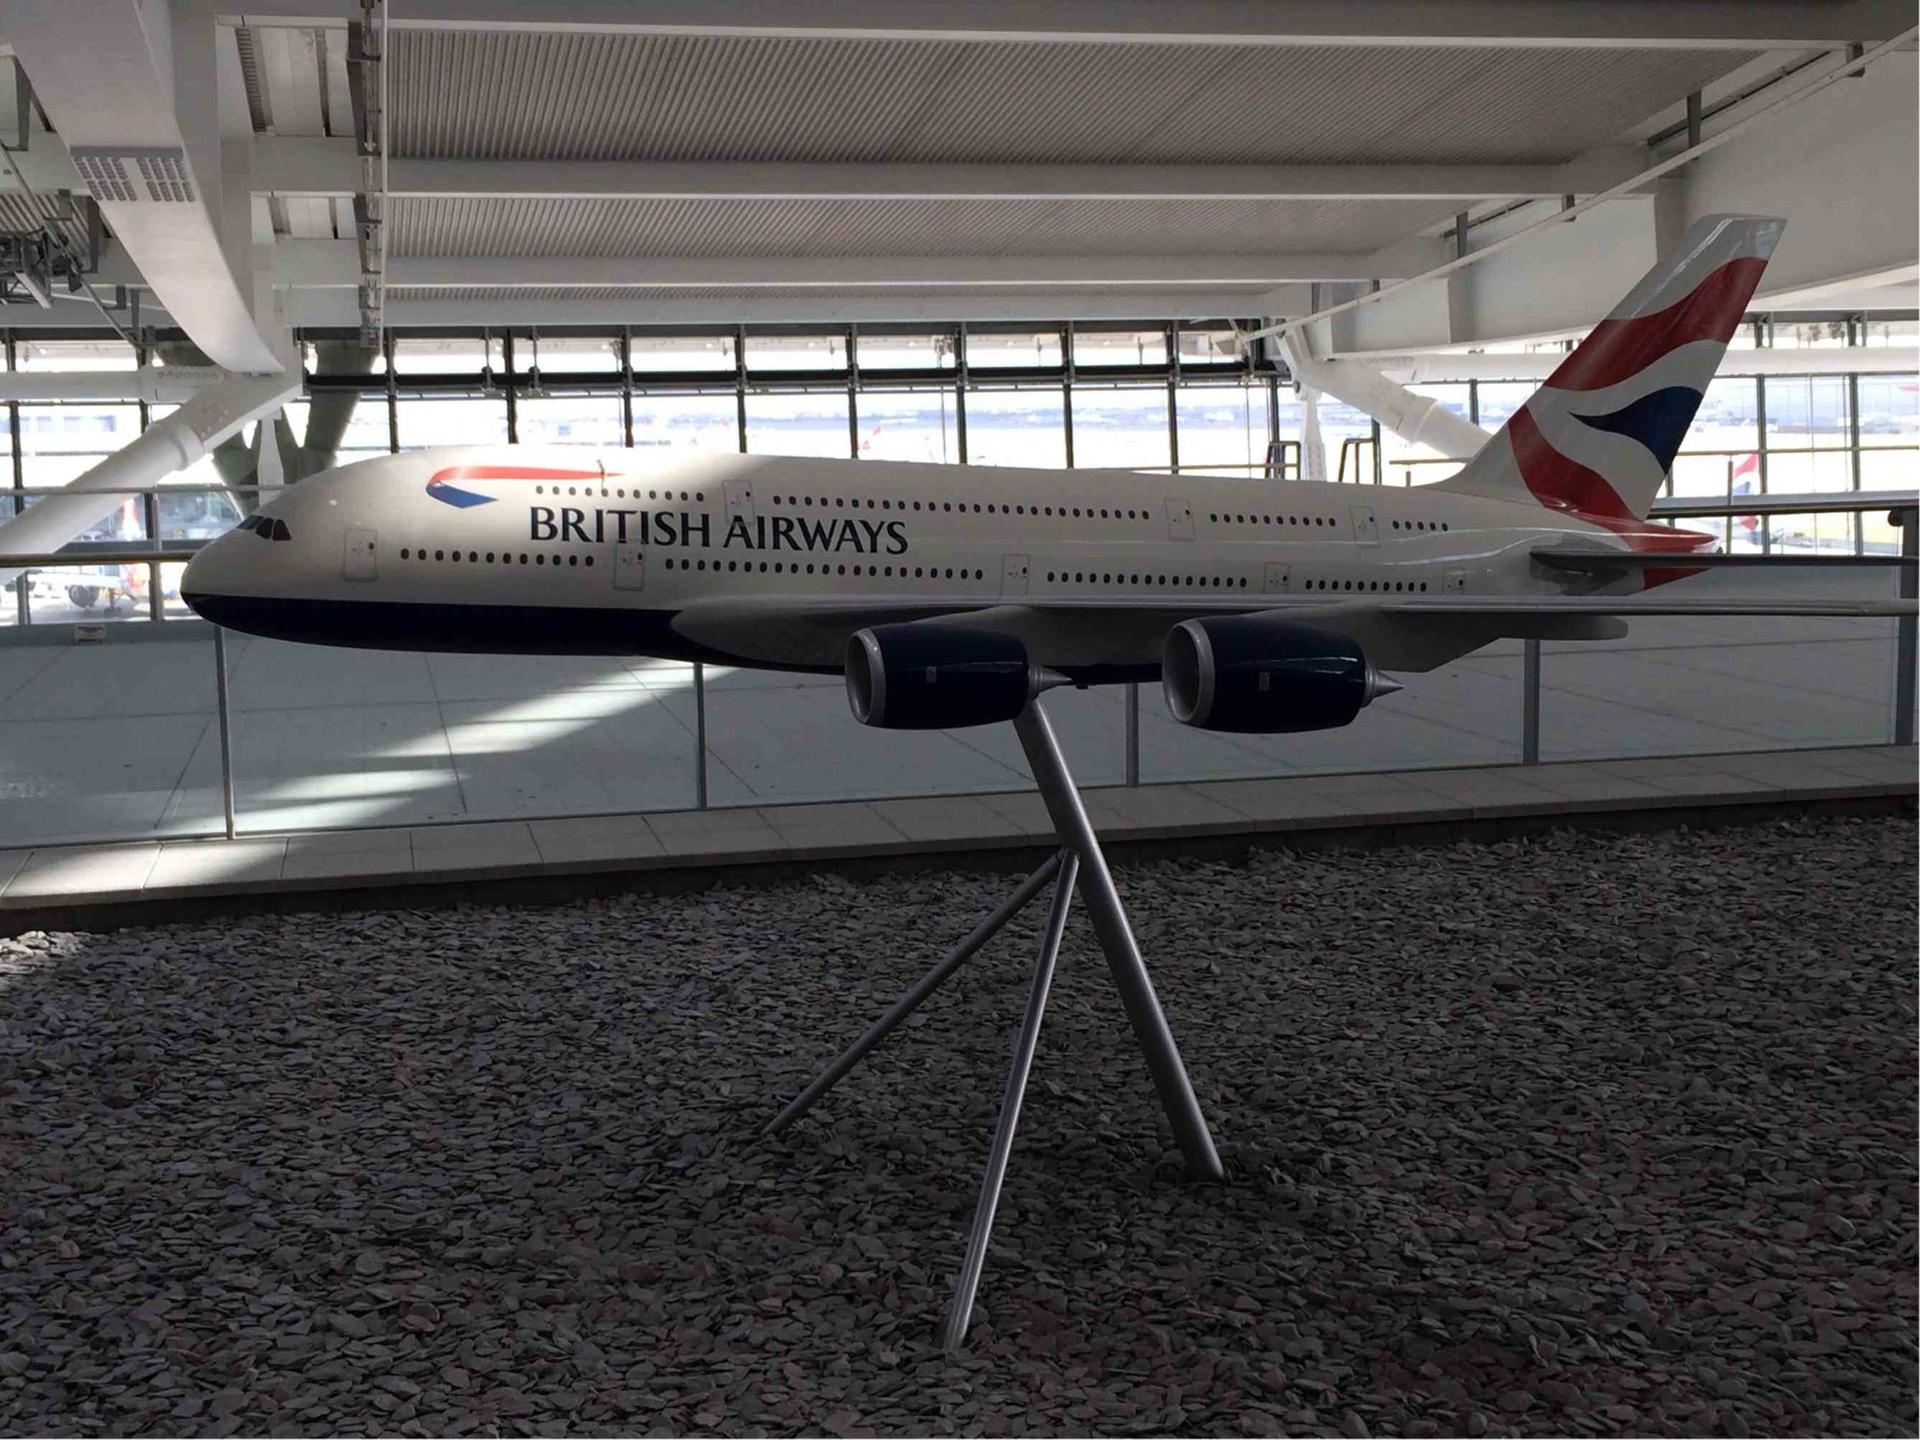 British Airways Galleries Club Lounge image 14 of 41